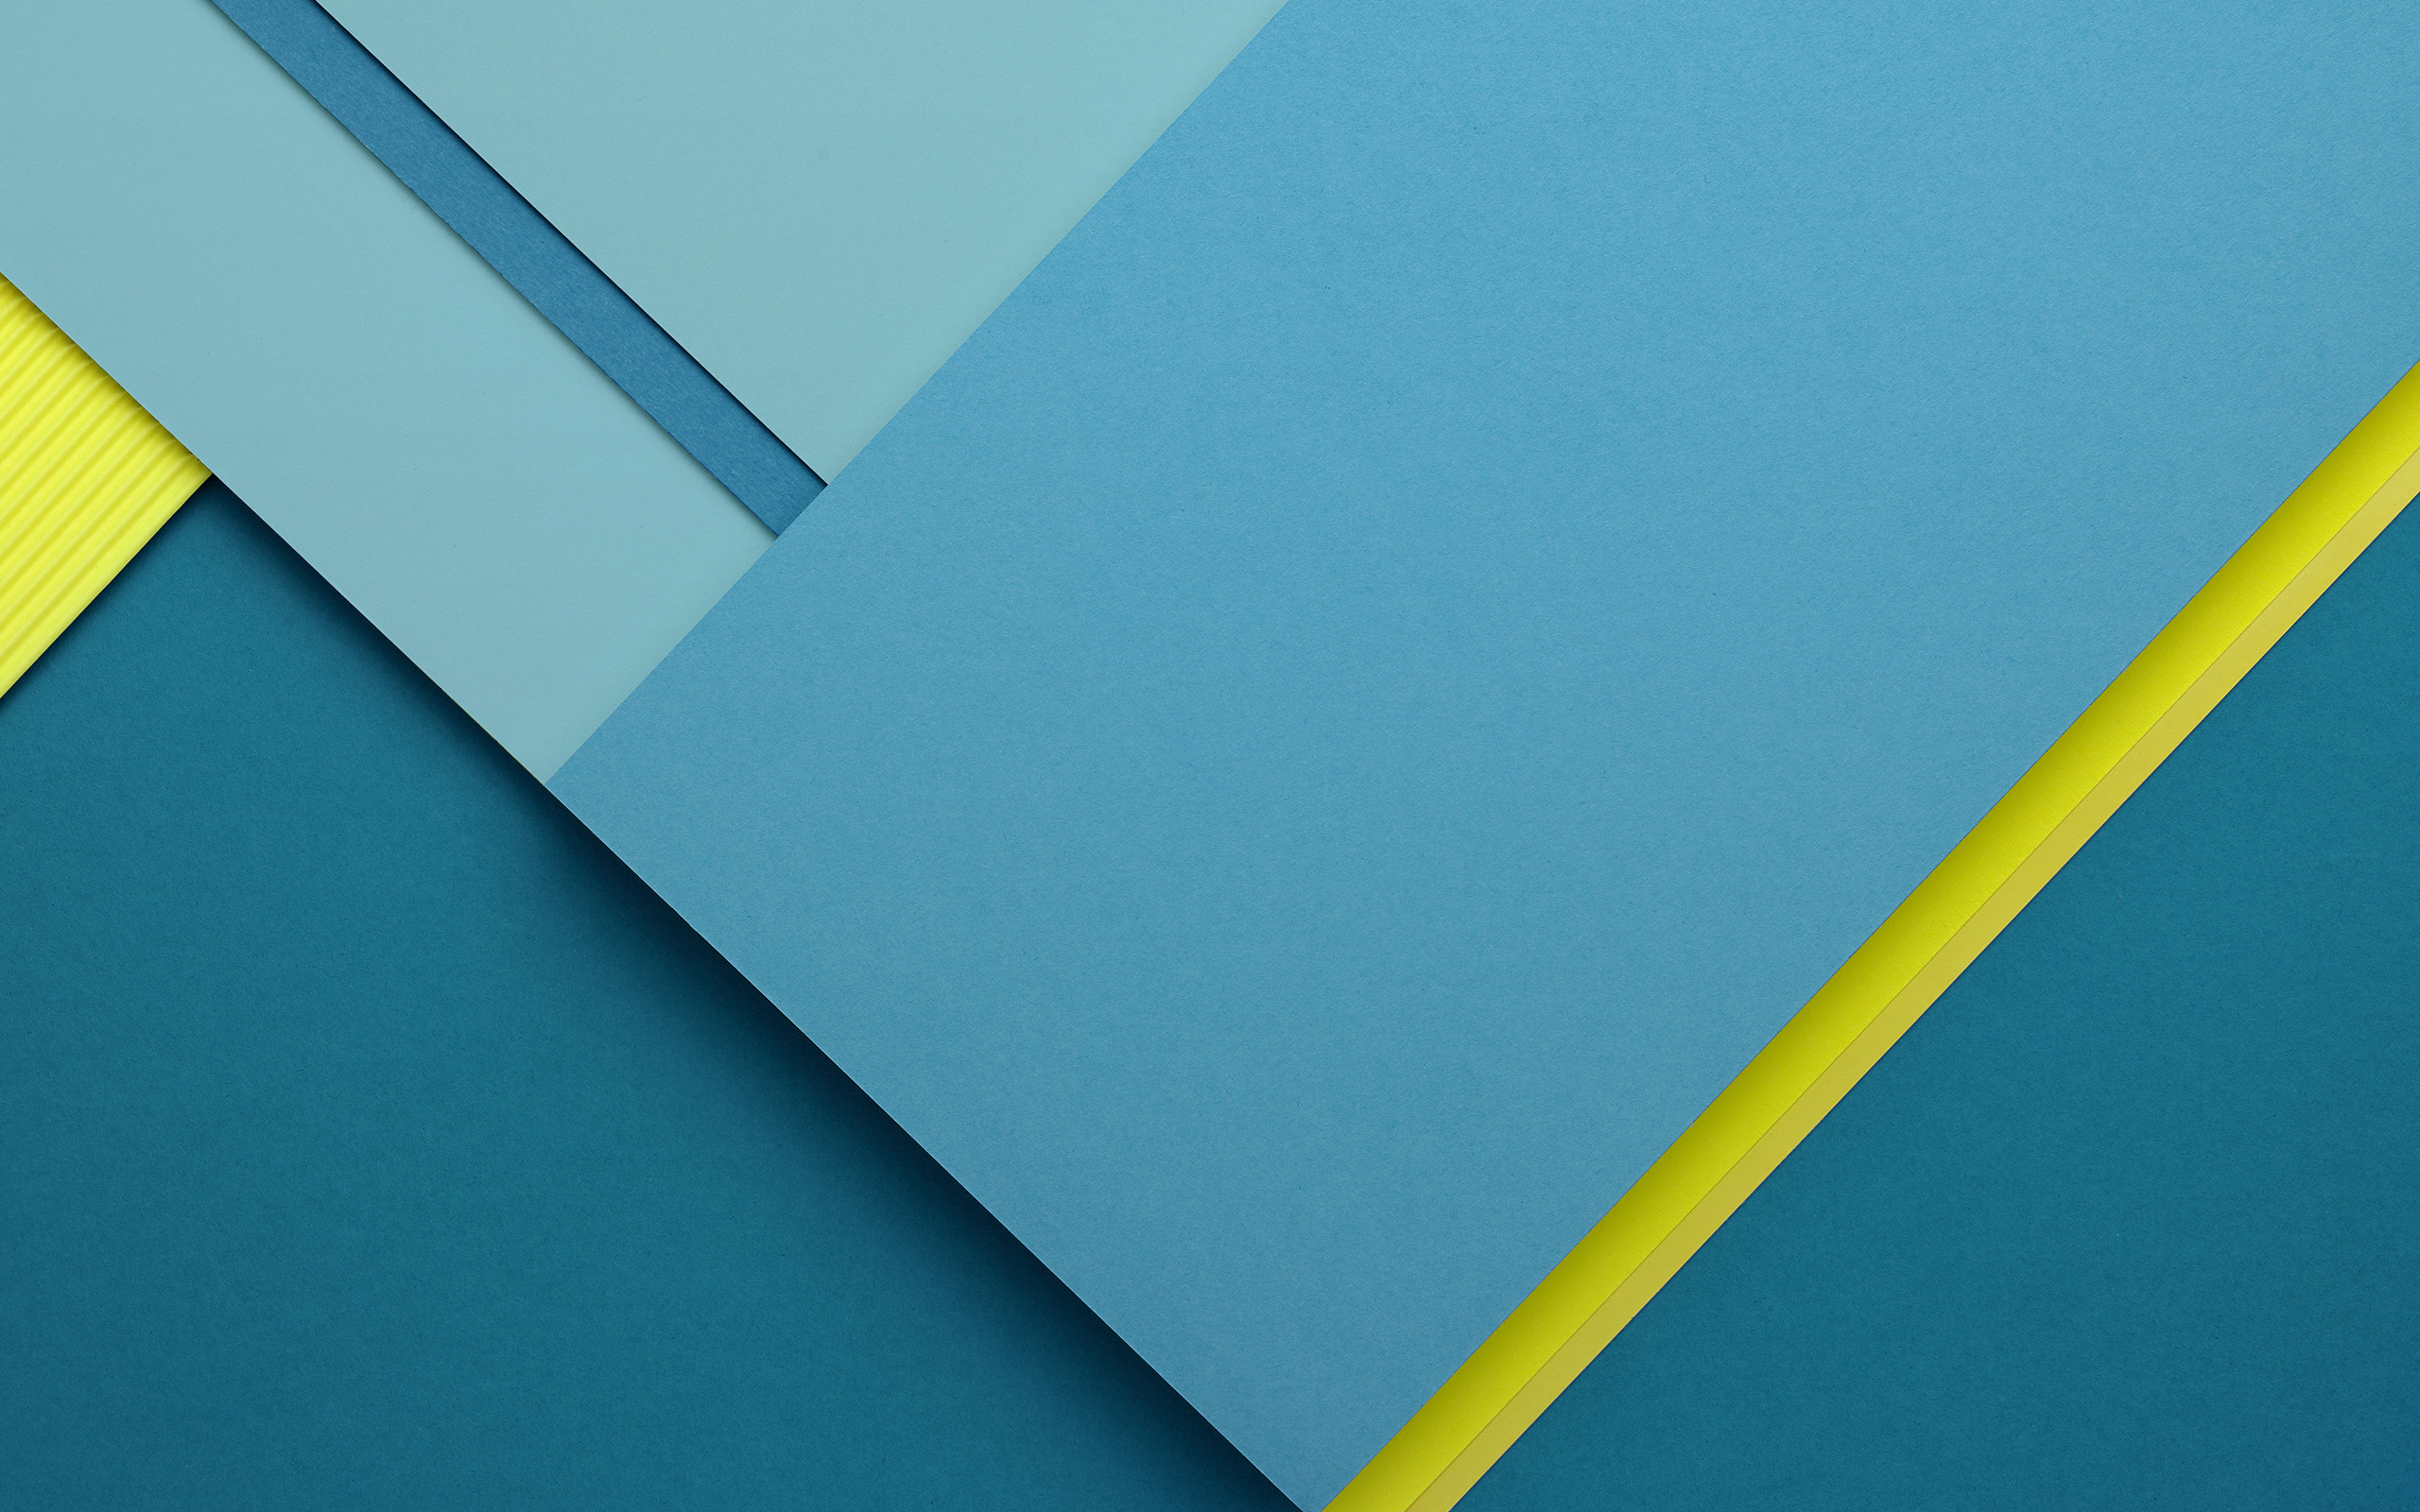 Is The Material Design Default Wallpaper For Chromebooks